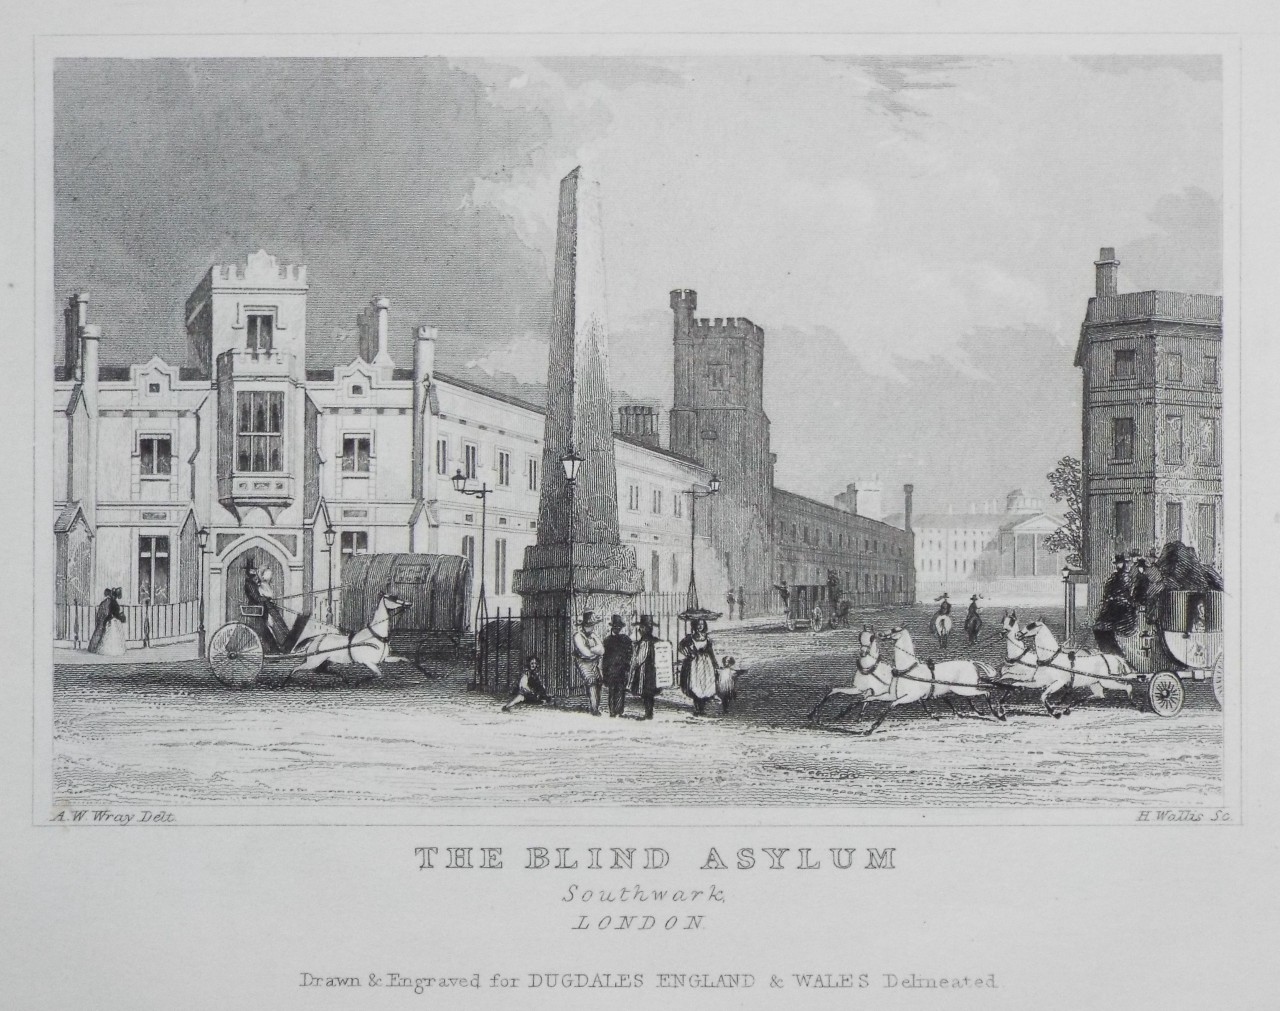 Print - The Blind Asylum Southwark London